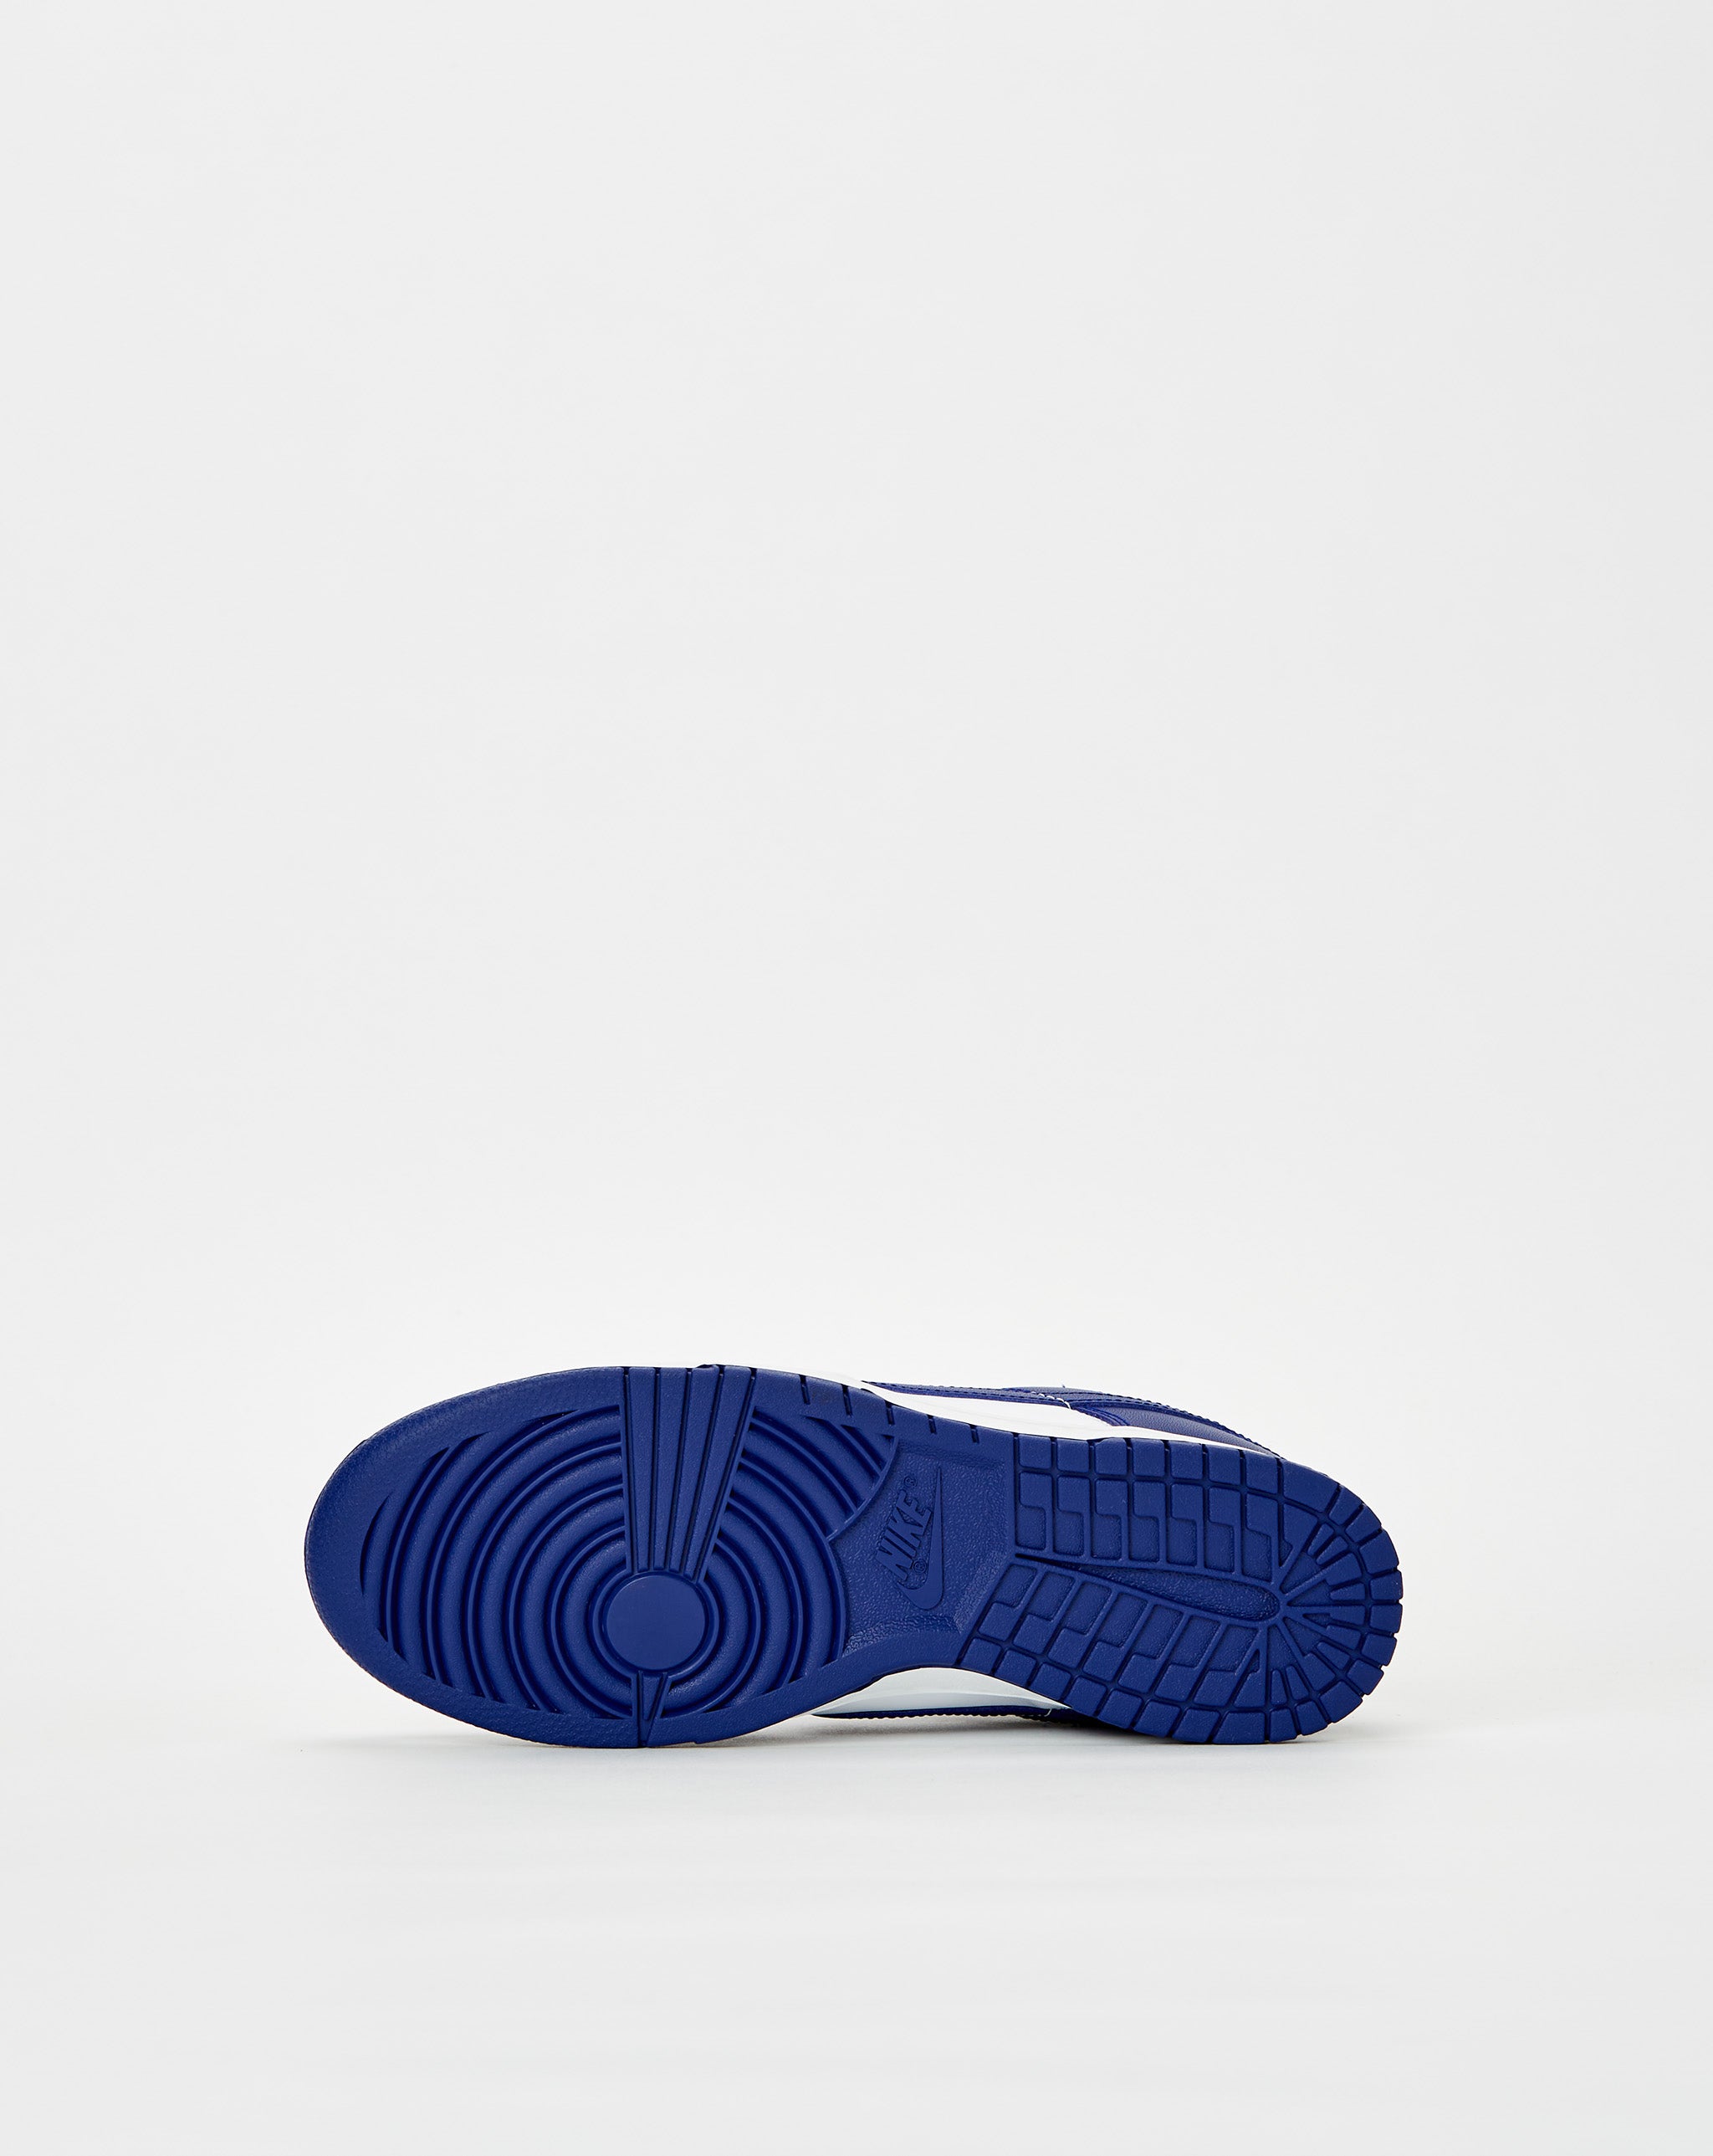 Nike Sandals DUDINO Polka 2C45B Evil Eye 254  - Cheap Erlebniswelt-fliegenfischen Jordan outlet